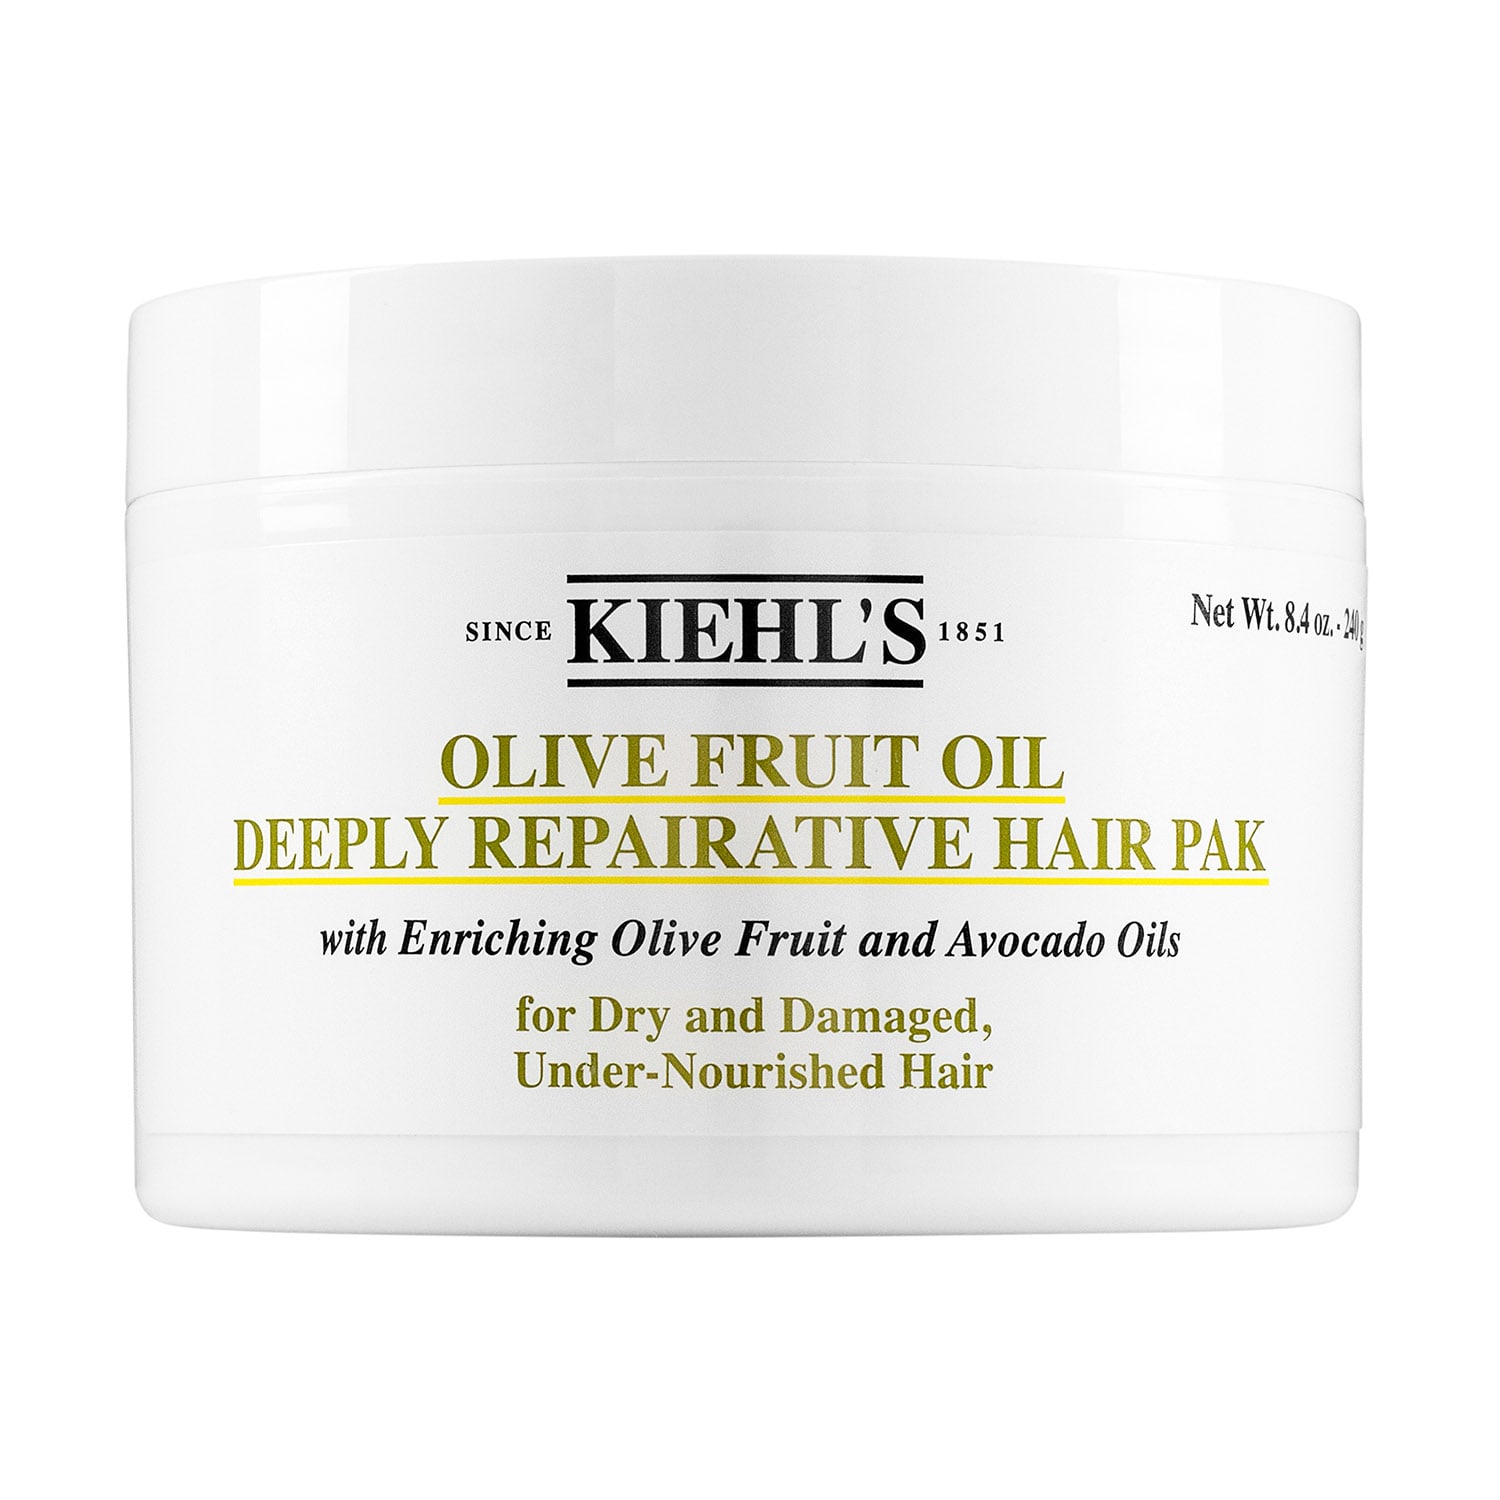 Olive fruit oil deeply repairative hair pak 3700194718541 84floz